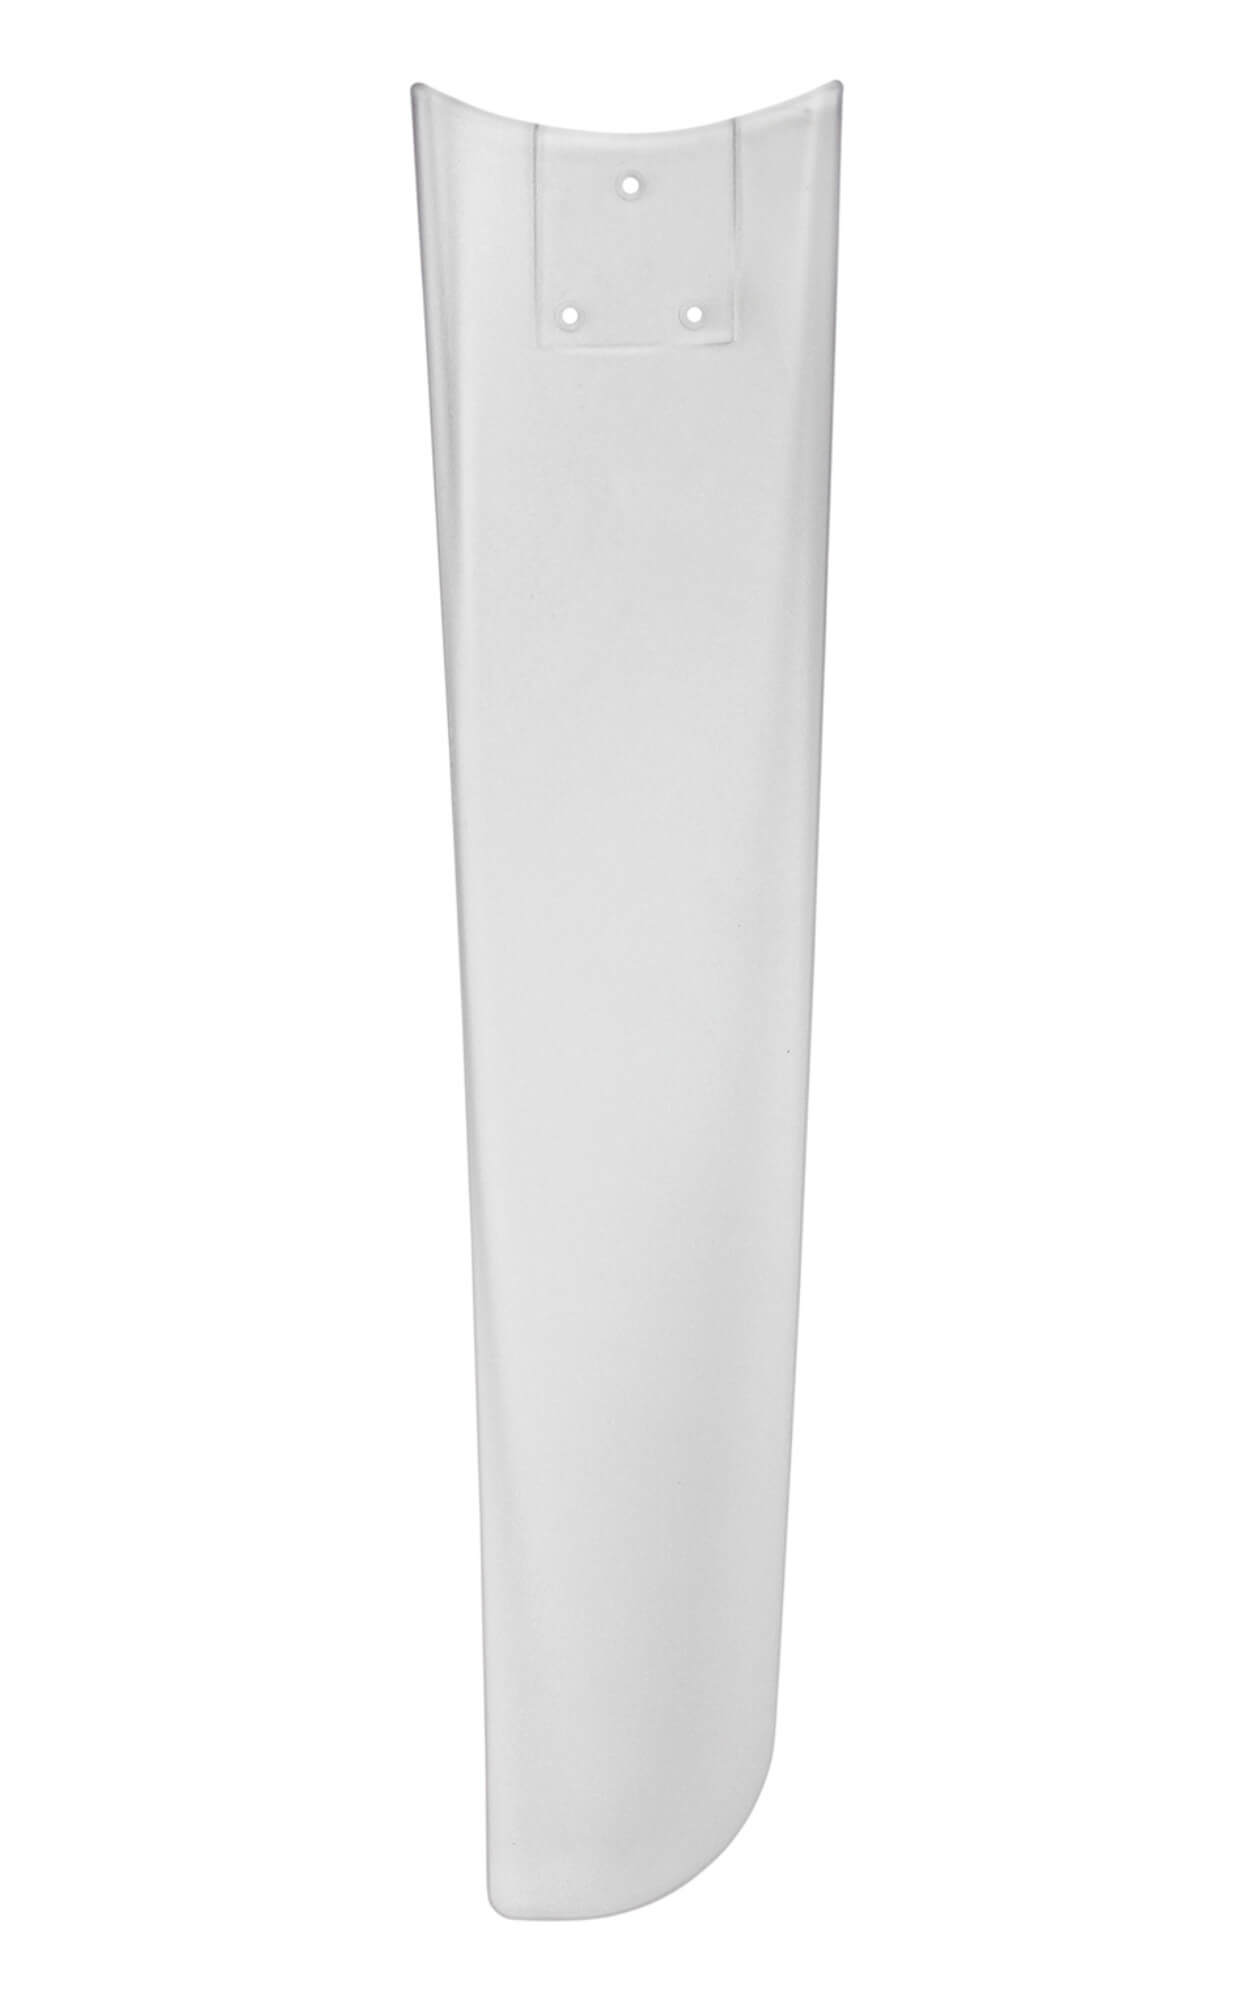 CASAFAN Mirage Deckenventilator Transparent Watt) (62